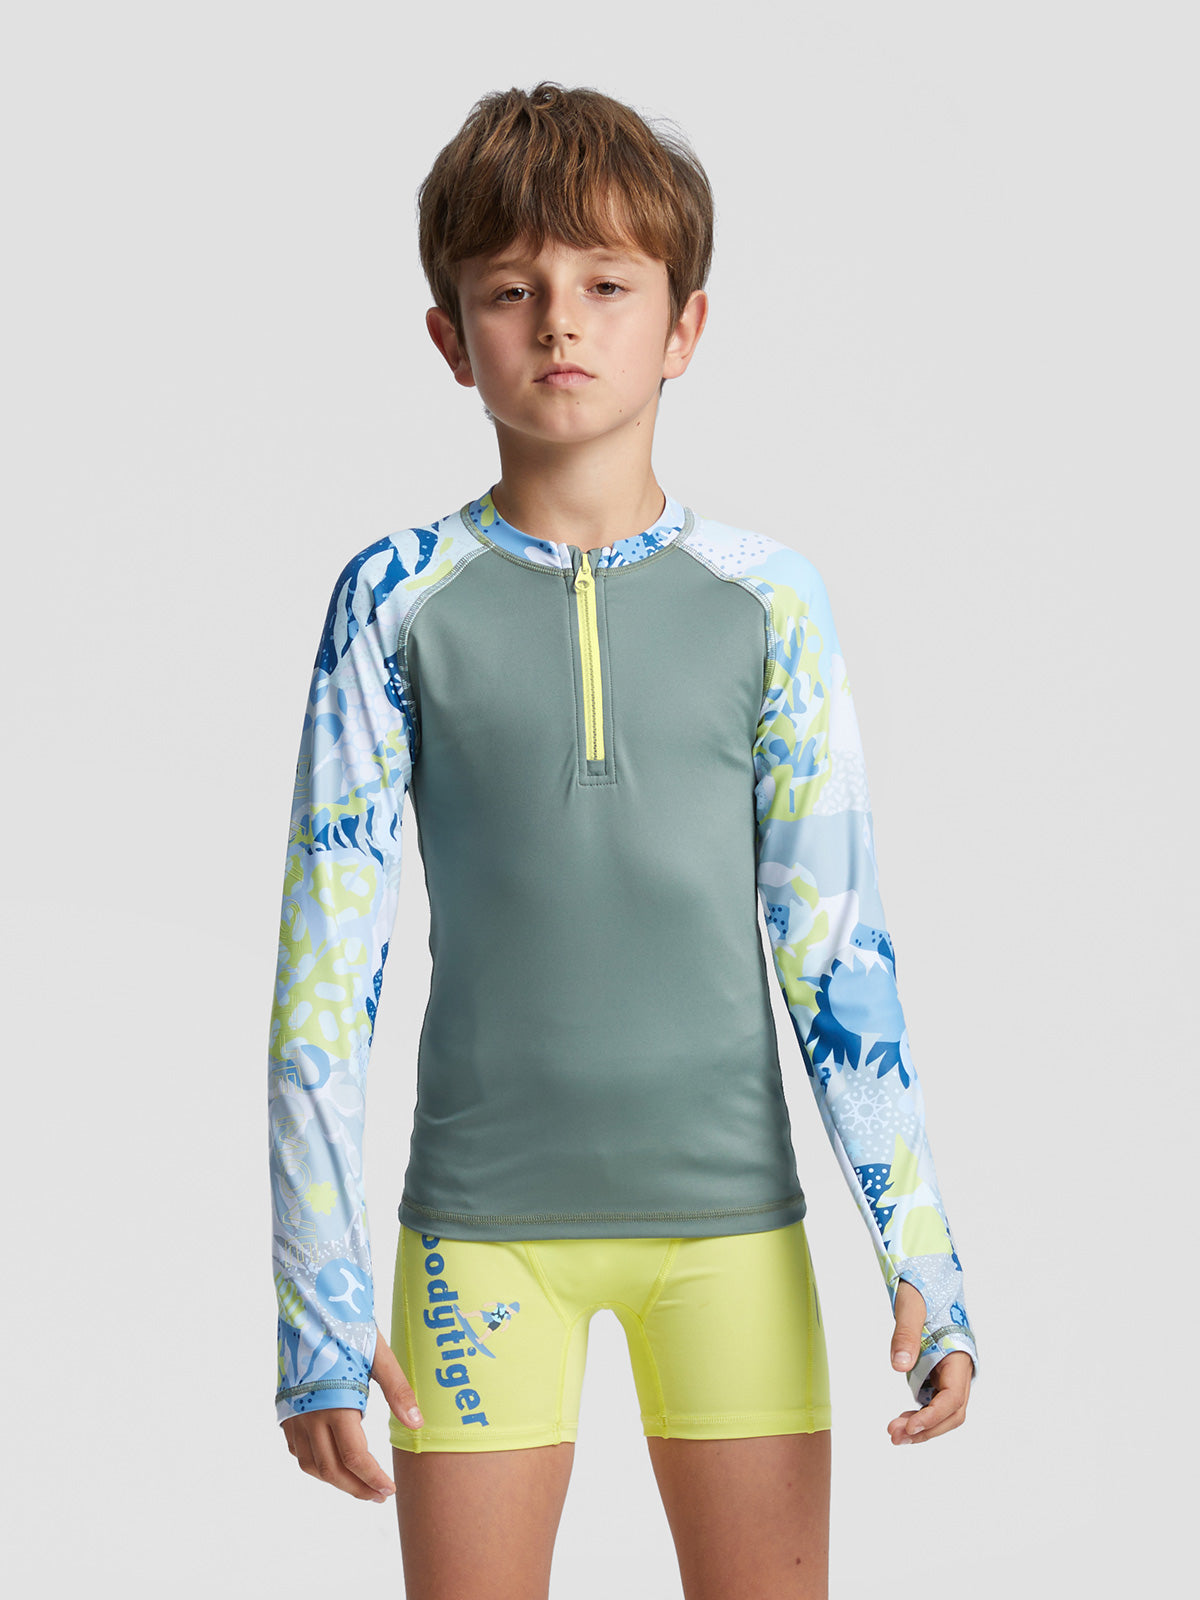 moodytiger Kids Fearless Surfing Suit UV Protection One-piece Swimwear